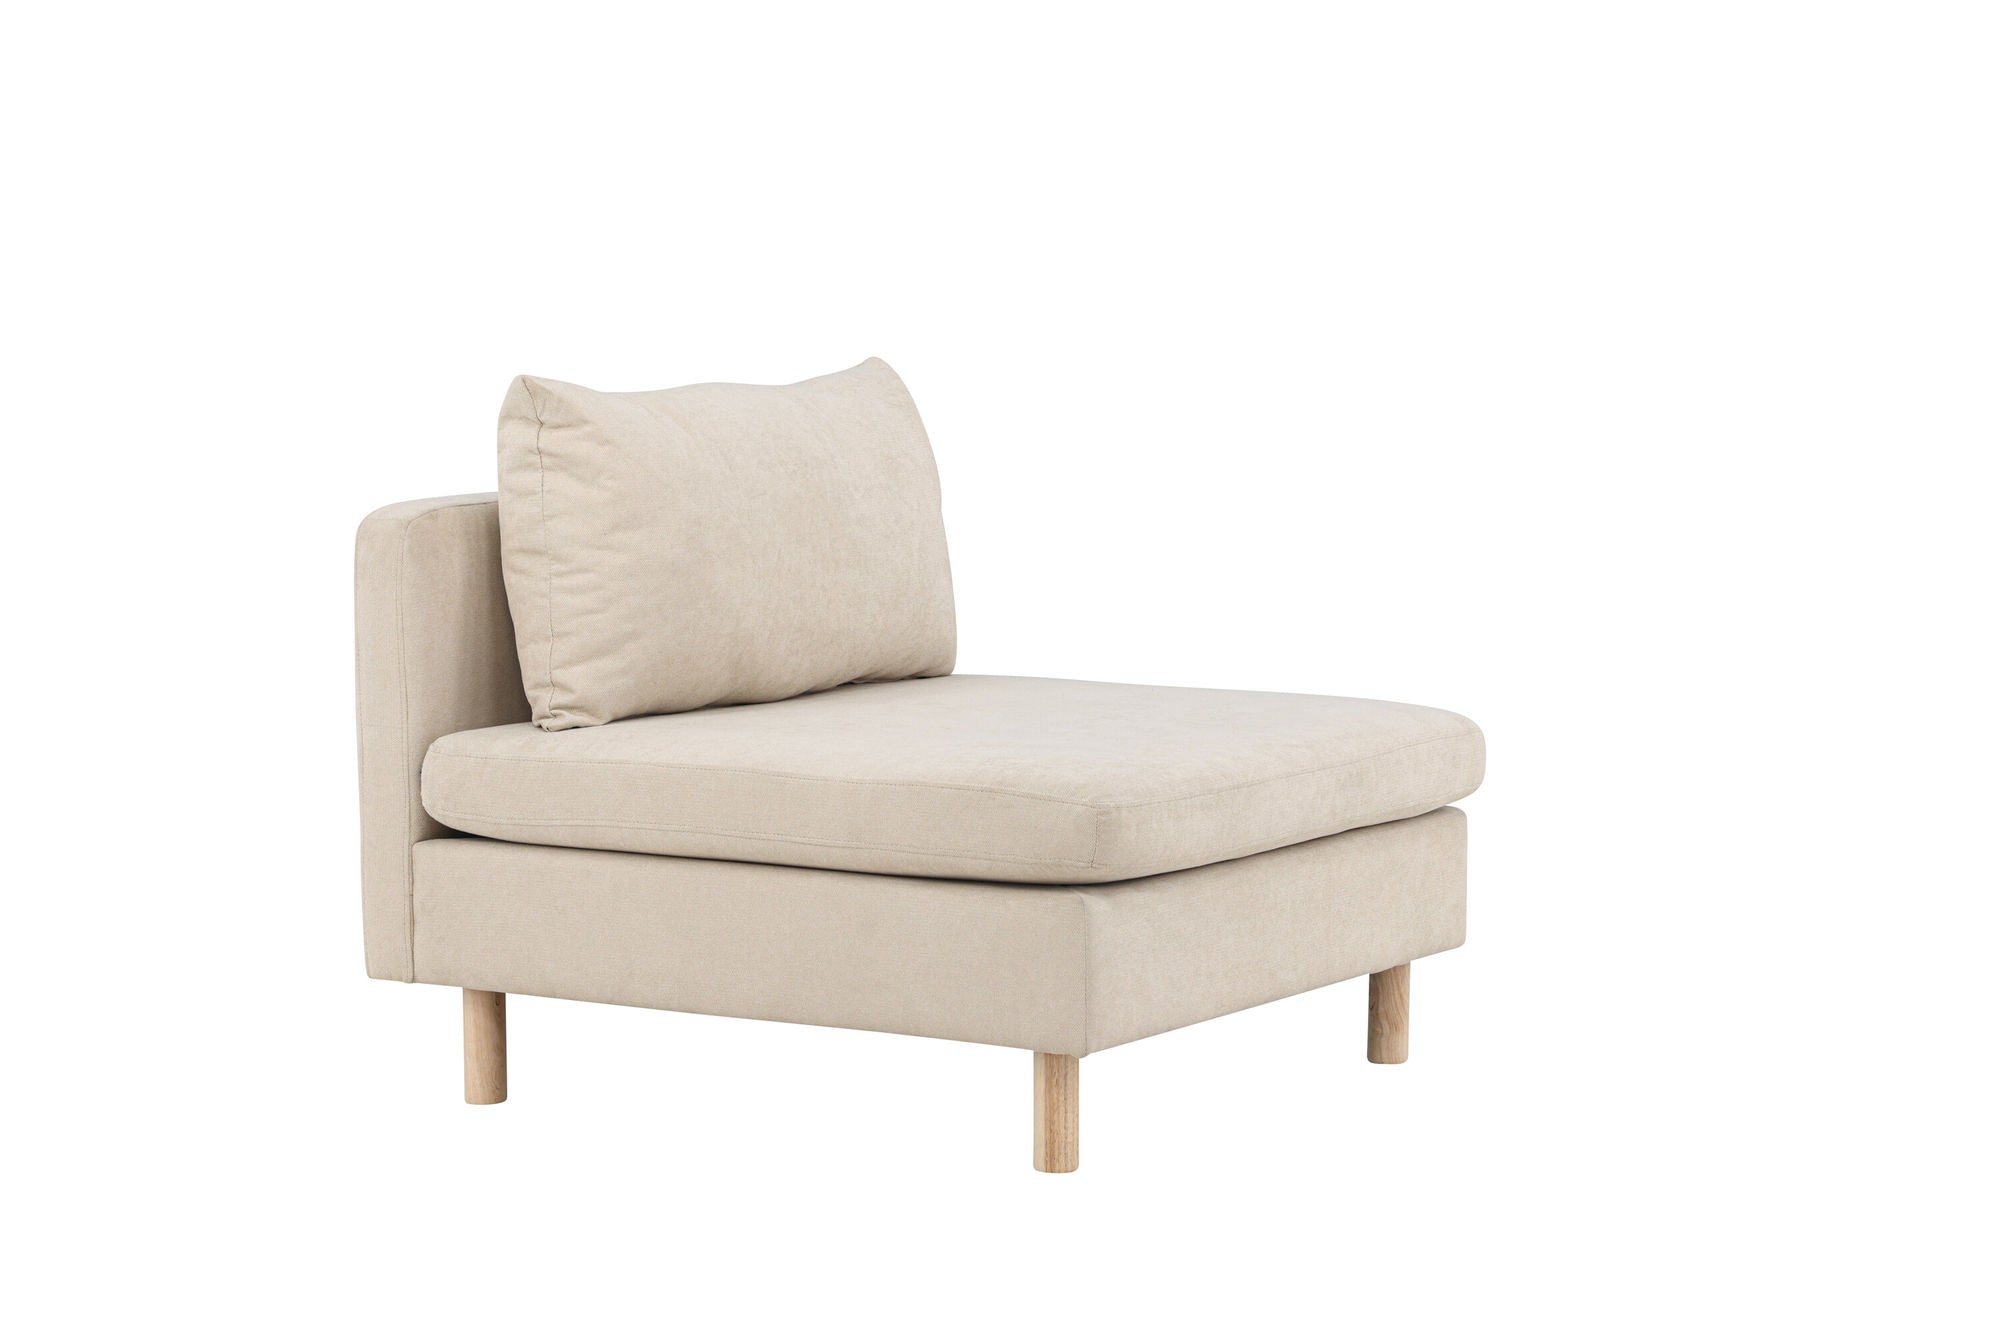 Venture Home Zero Single Sofa - Woodlook / Beige Fabric - vivahabitat.com